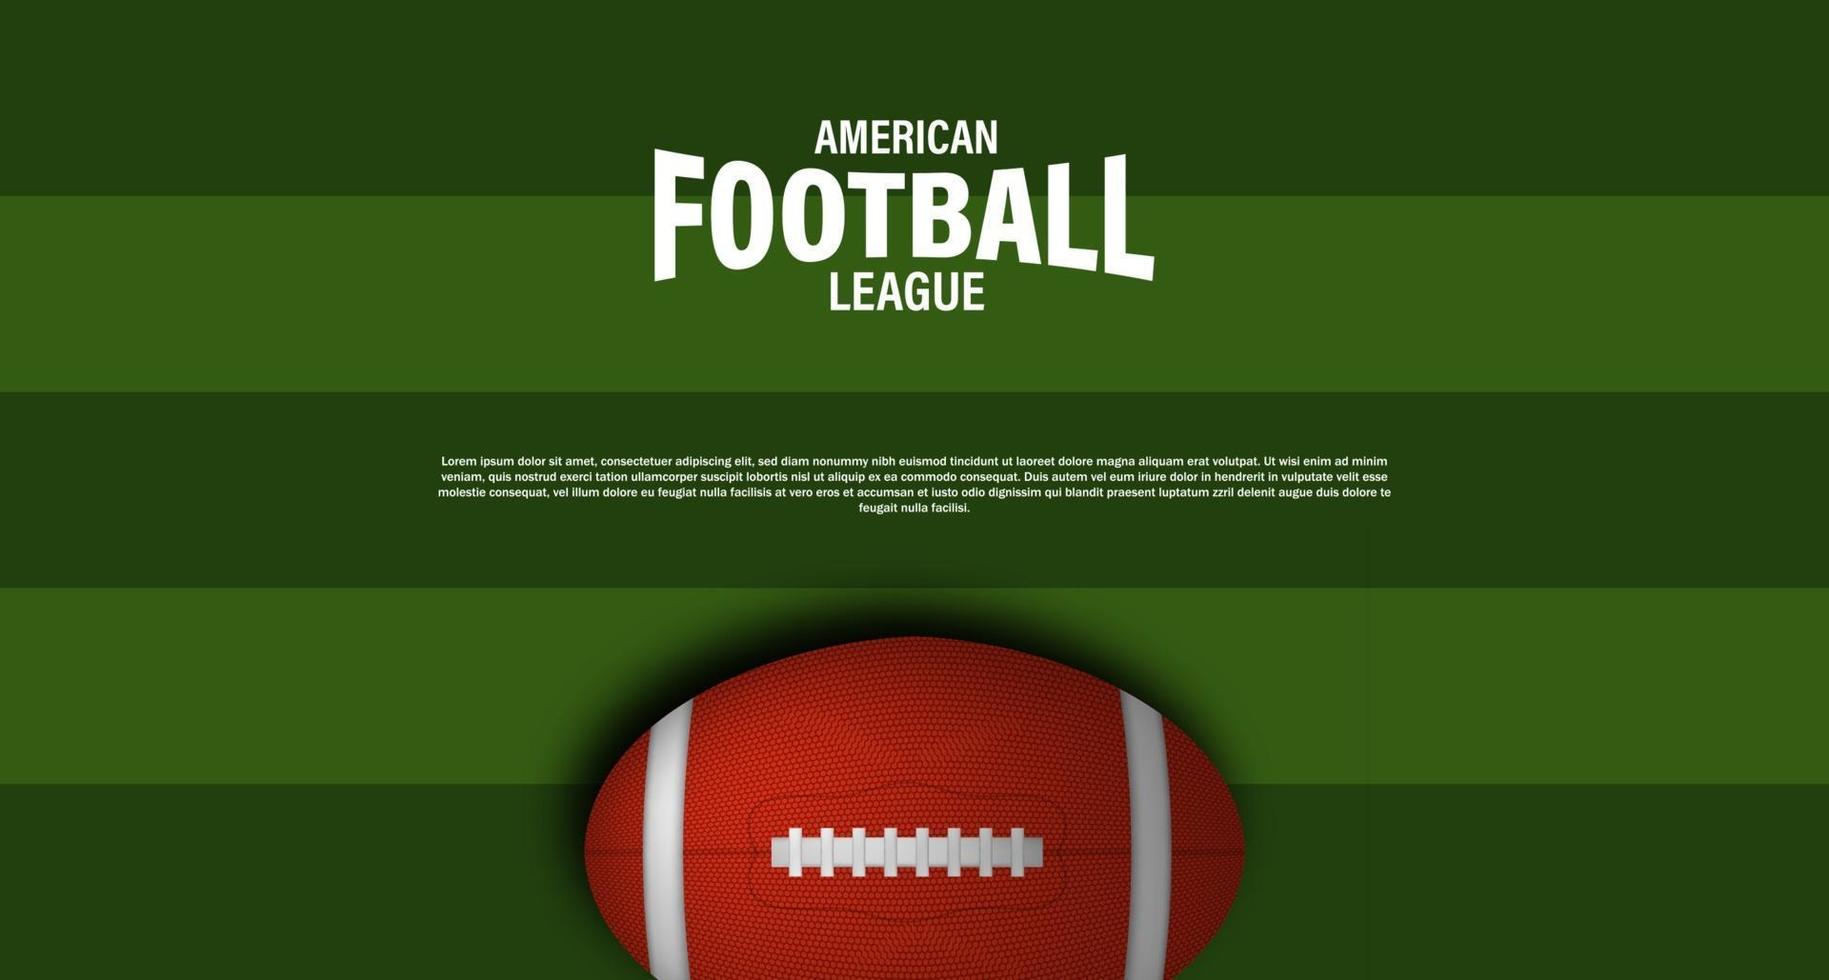 Plantilla de banner de póster de rugby de fútbol americano con pelota ovalada 3d vector